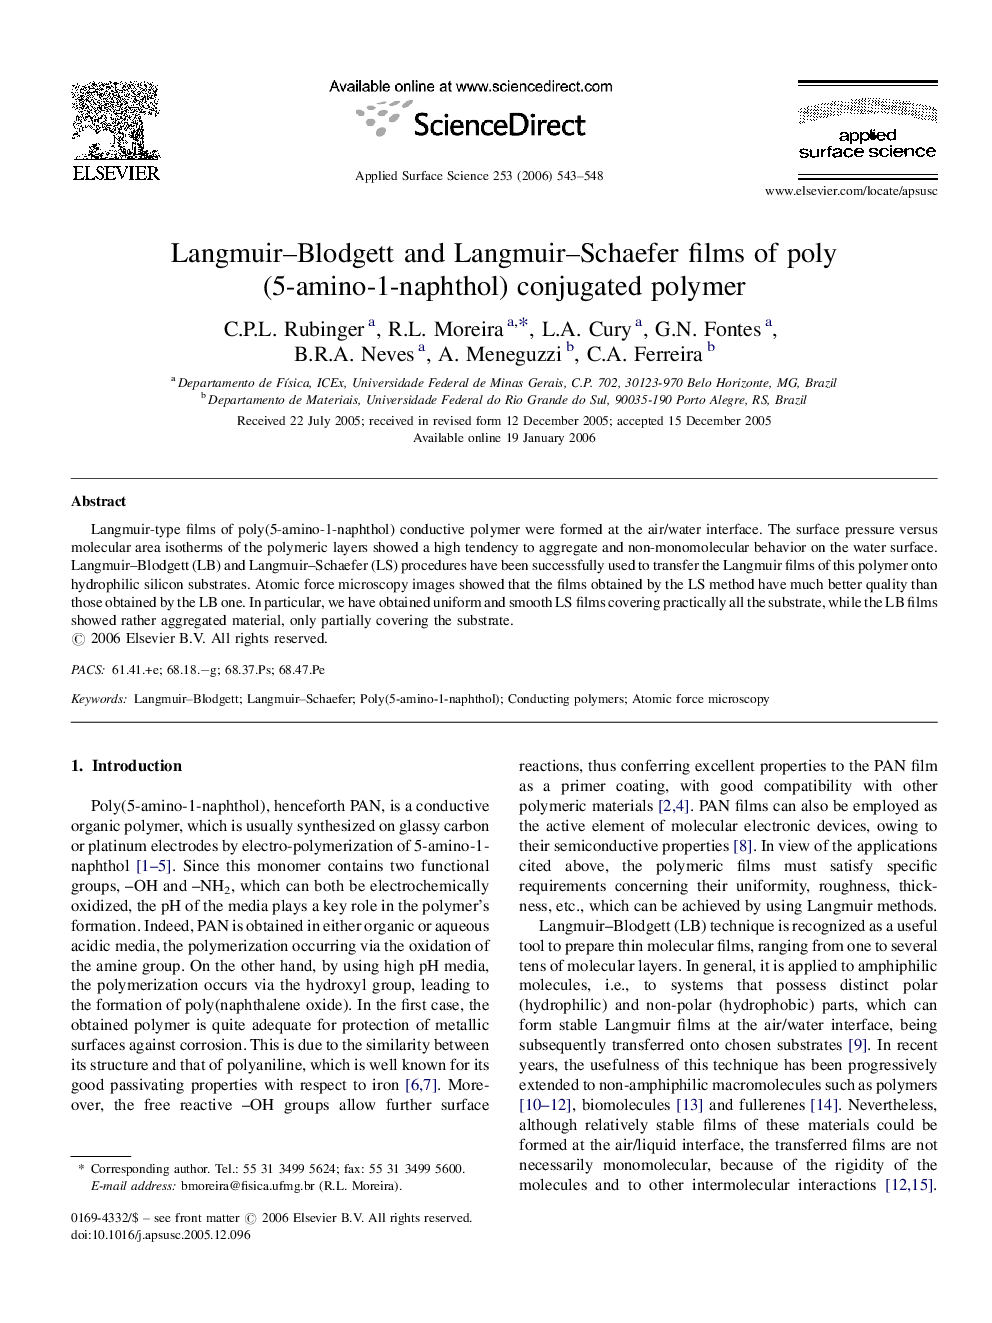 Langmuir-Blodgett and Langmuir-Schaefer films of poly(5-amino-1-naphthol) conjugated polymer